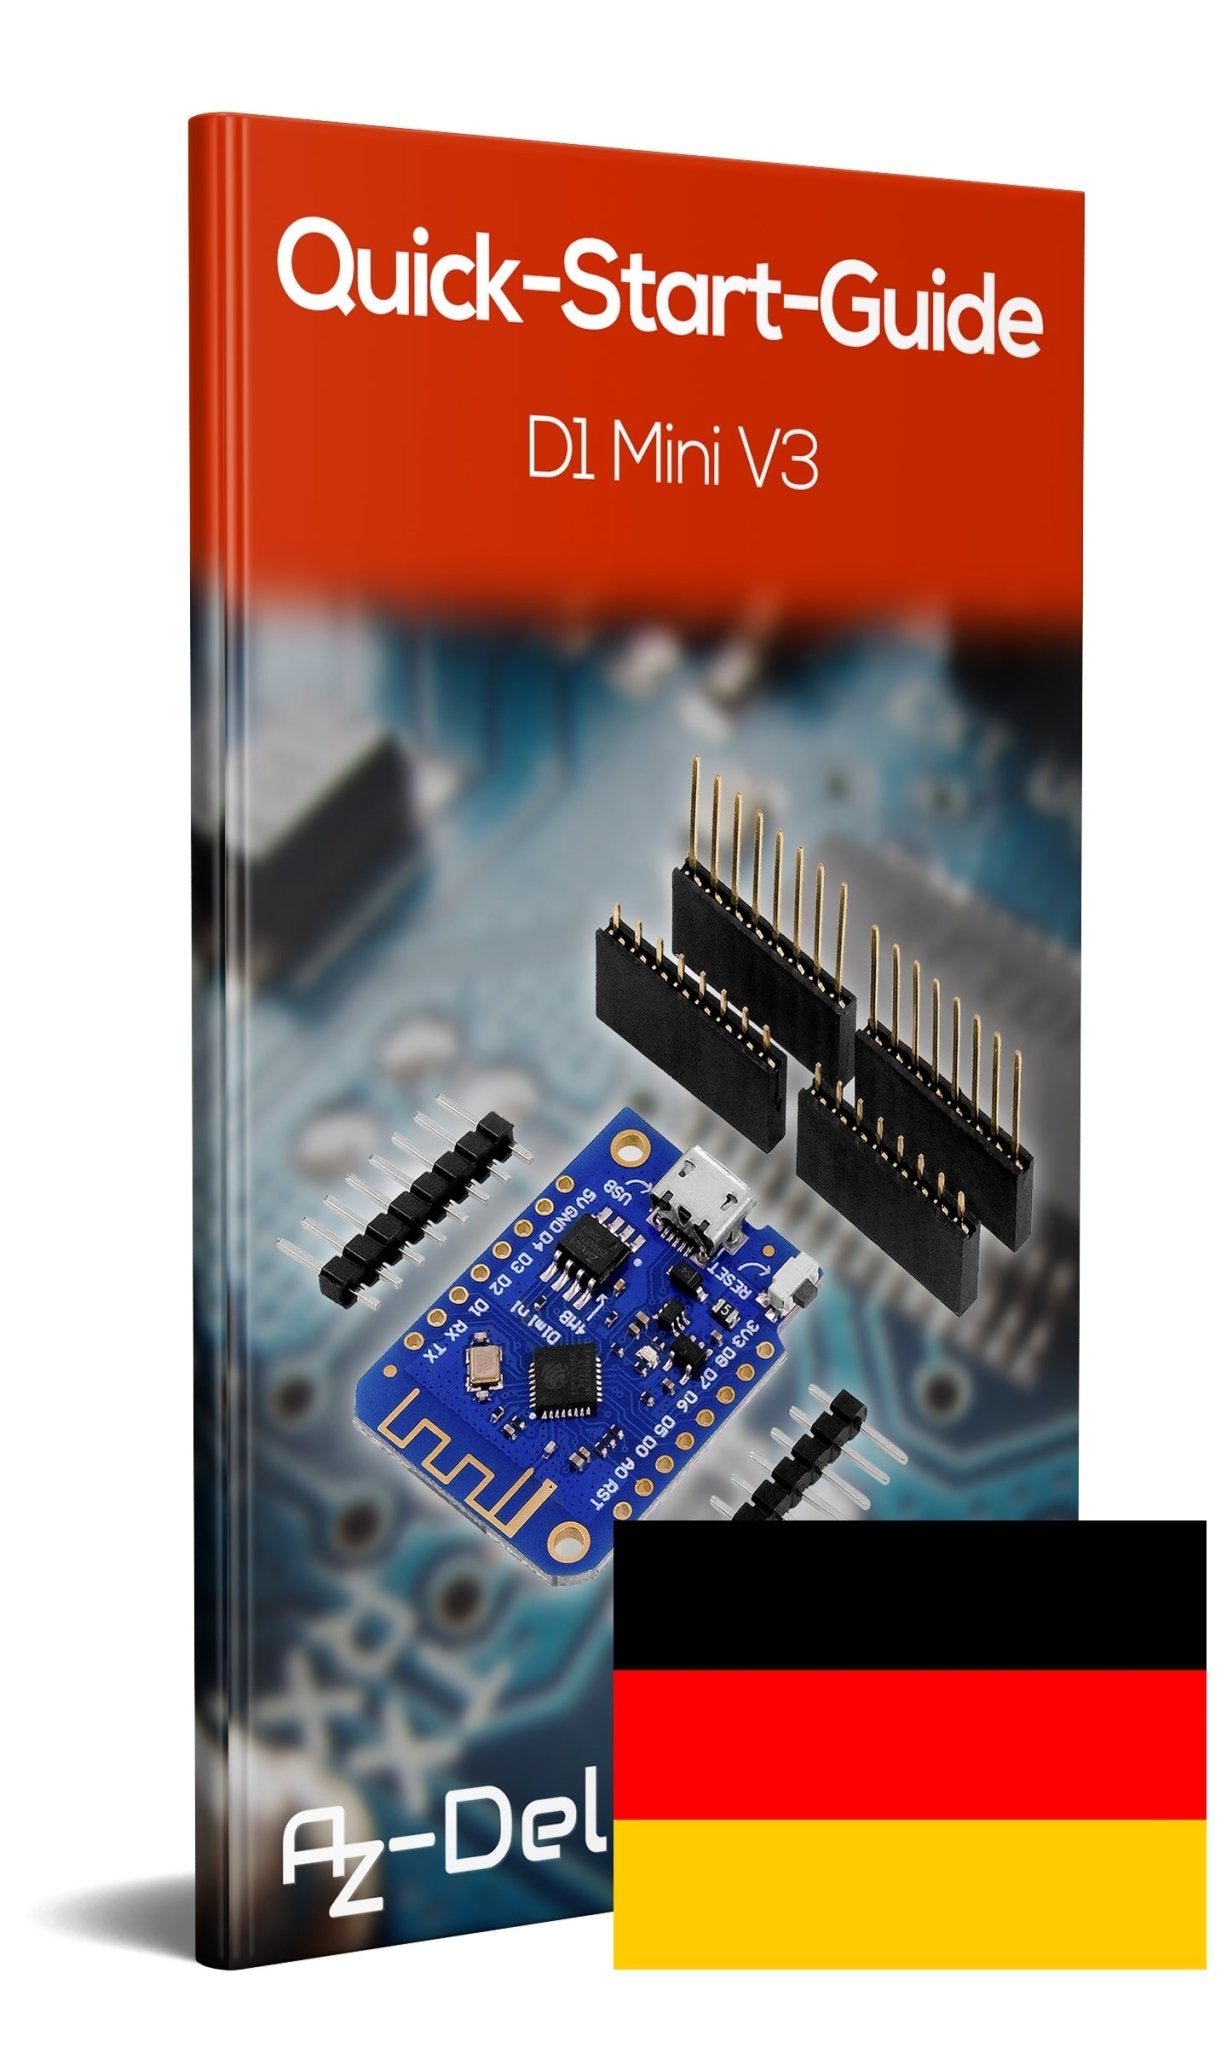 D1 Mini V3 NodeMCU mit ESP8266-12F WLAN Modul - AZ-Delivery